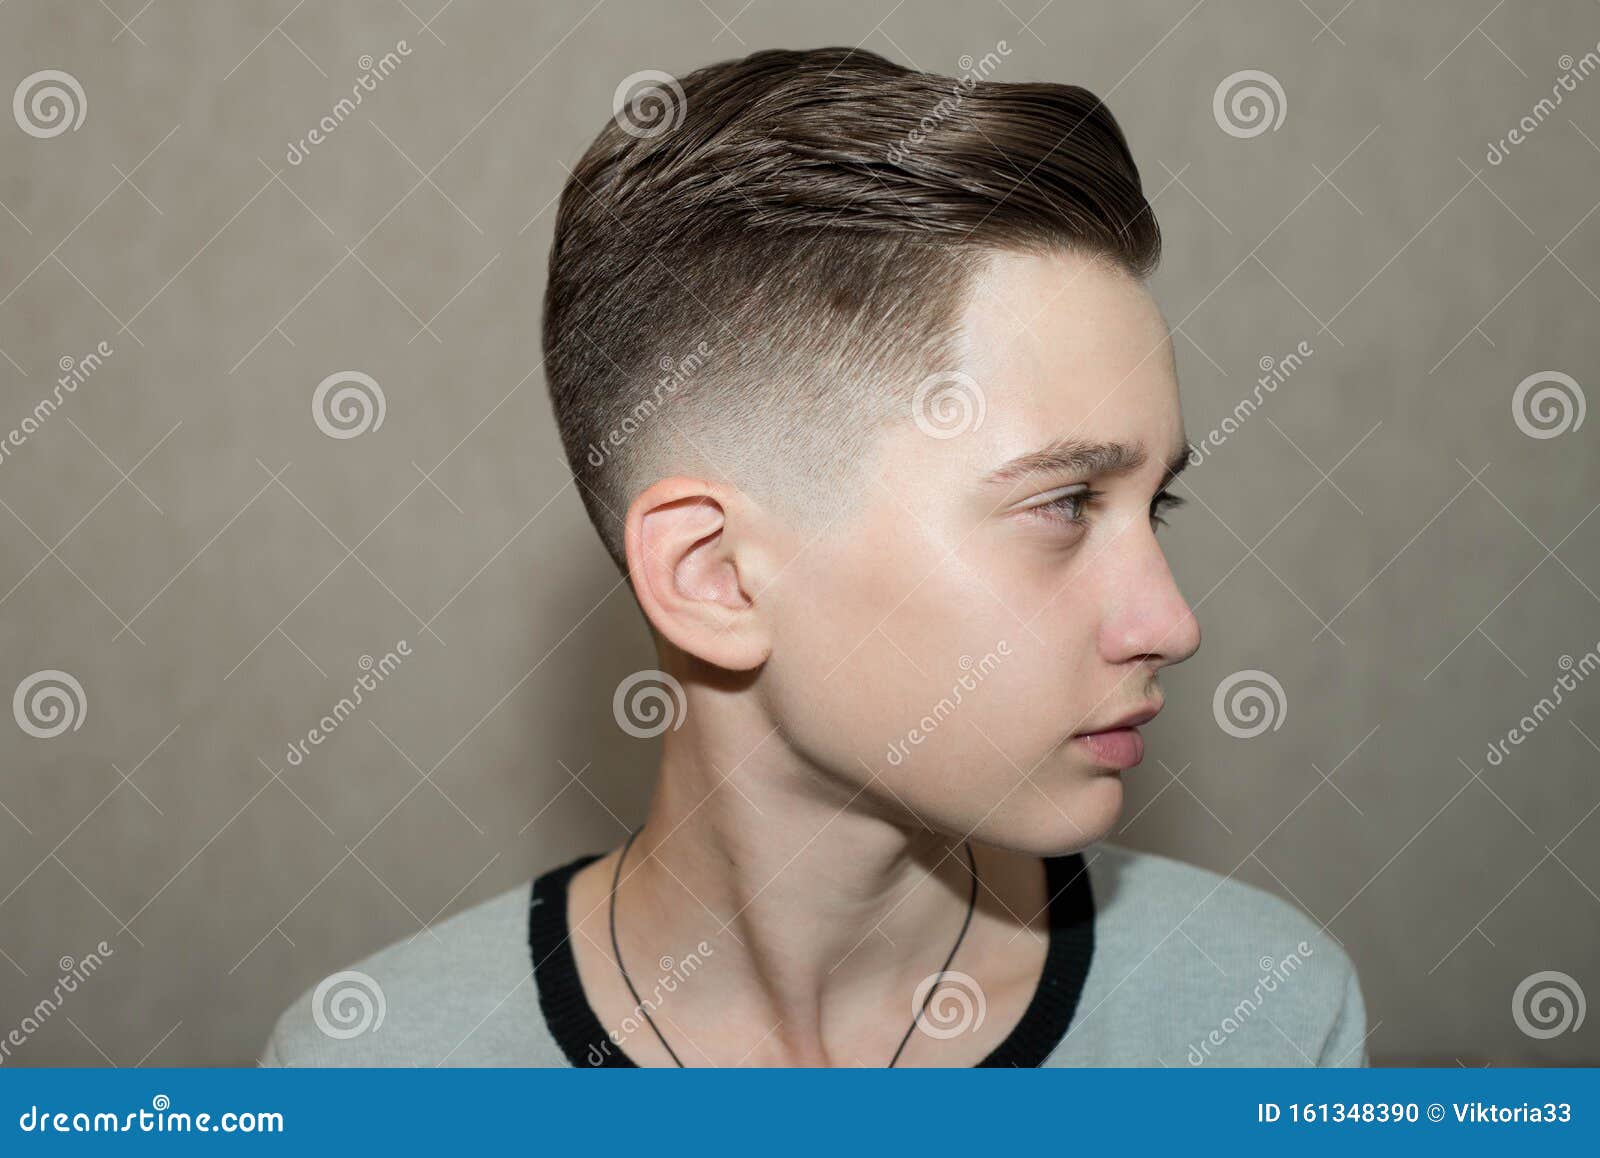 16 Popular Crew Cut Haircuts For Men